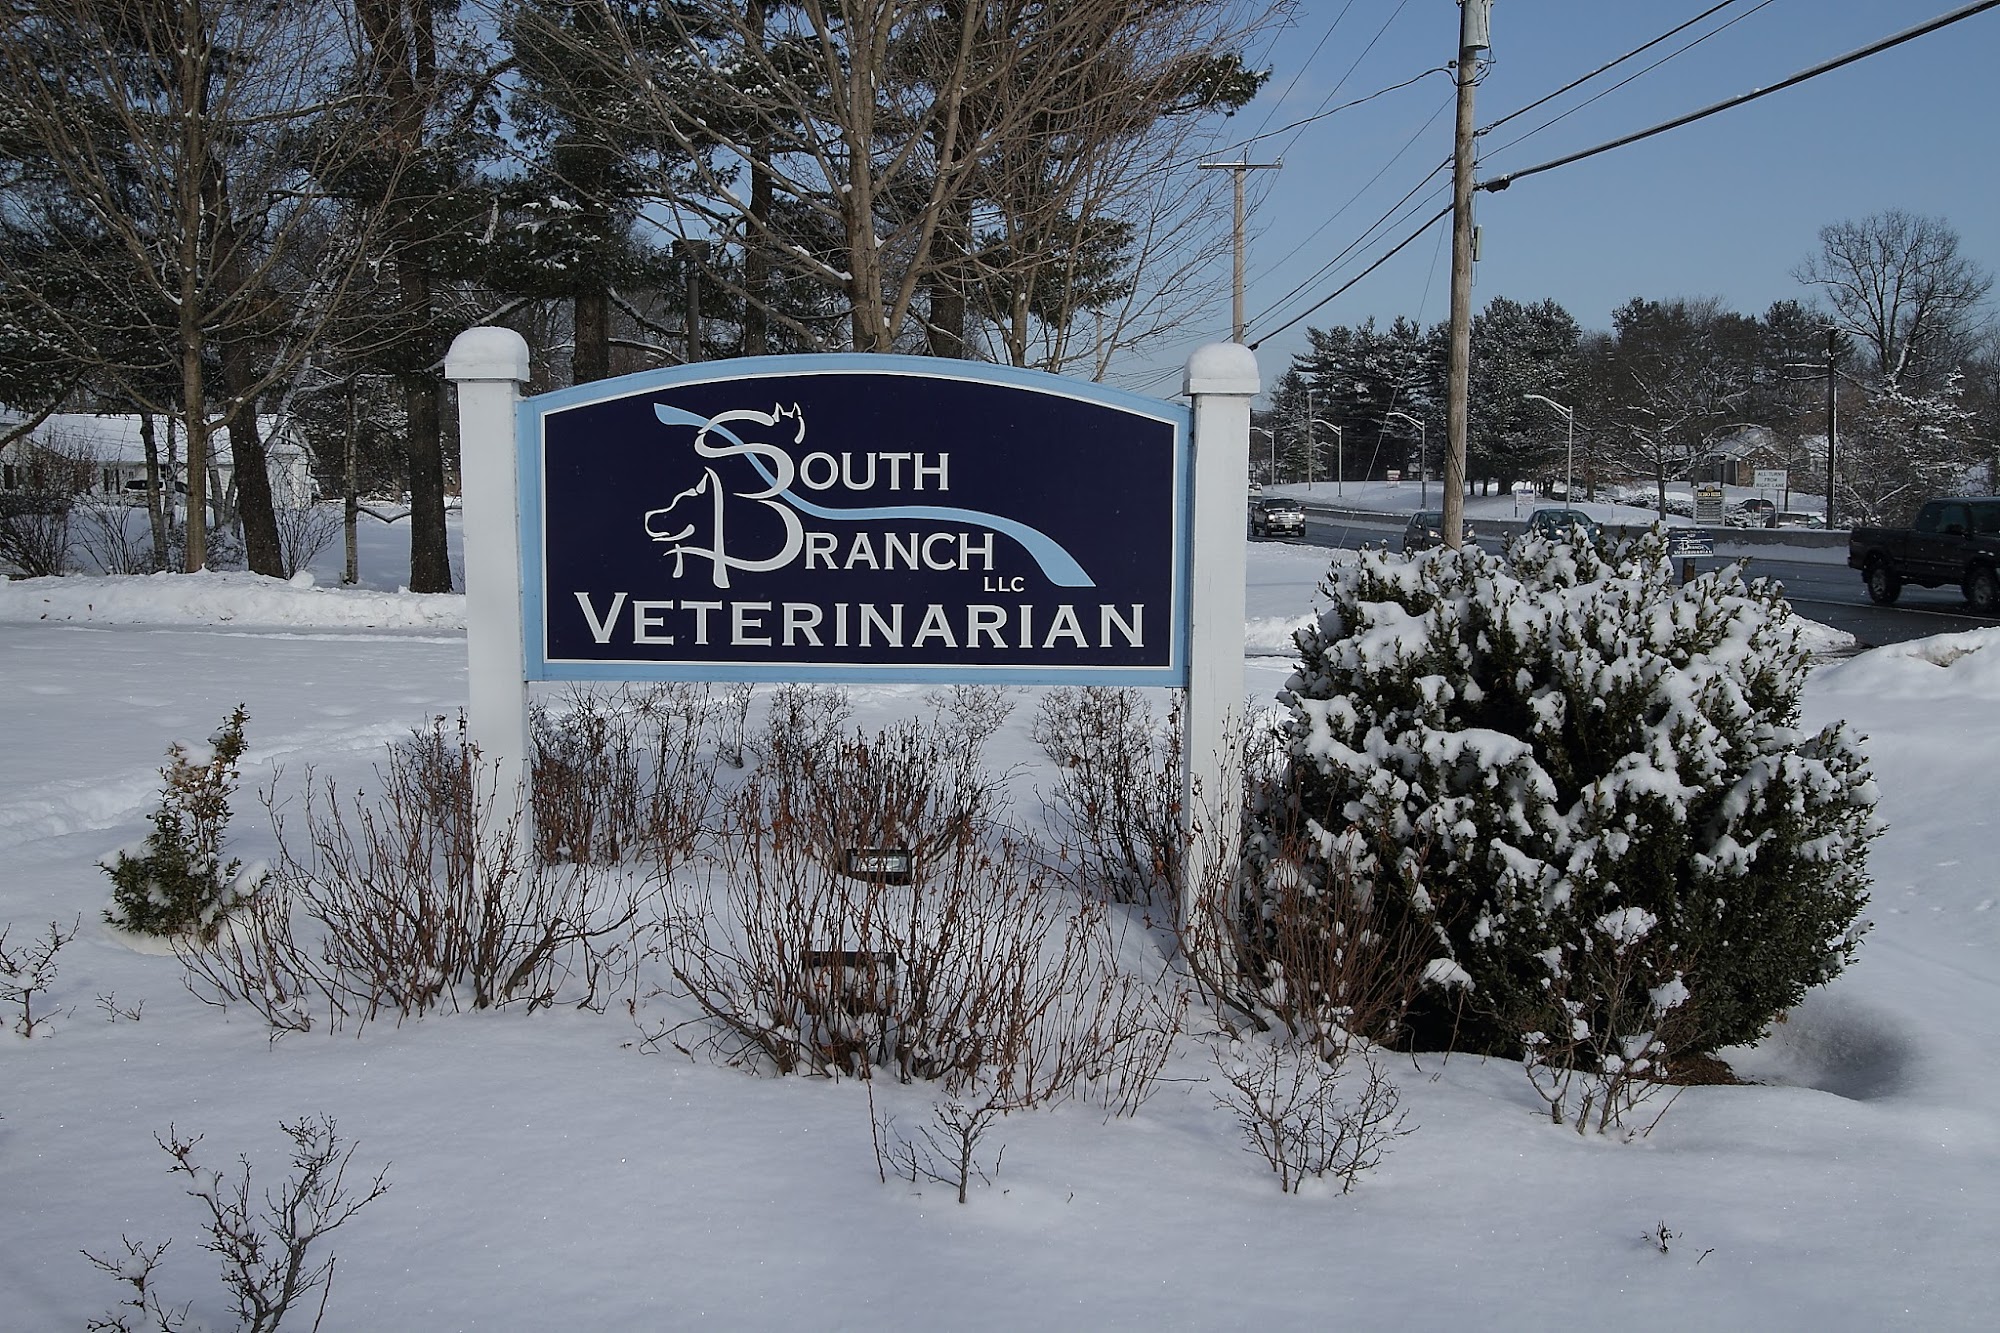 South Branch Veterinary Services 1127 NJ-31, Lebanon New Jersey 08833